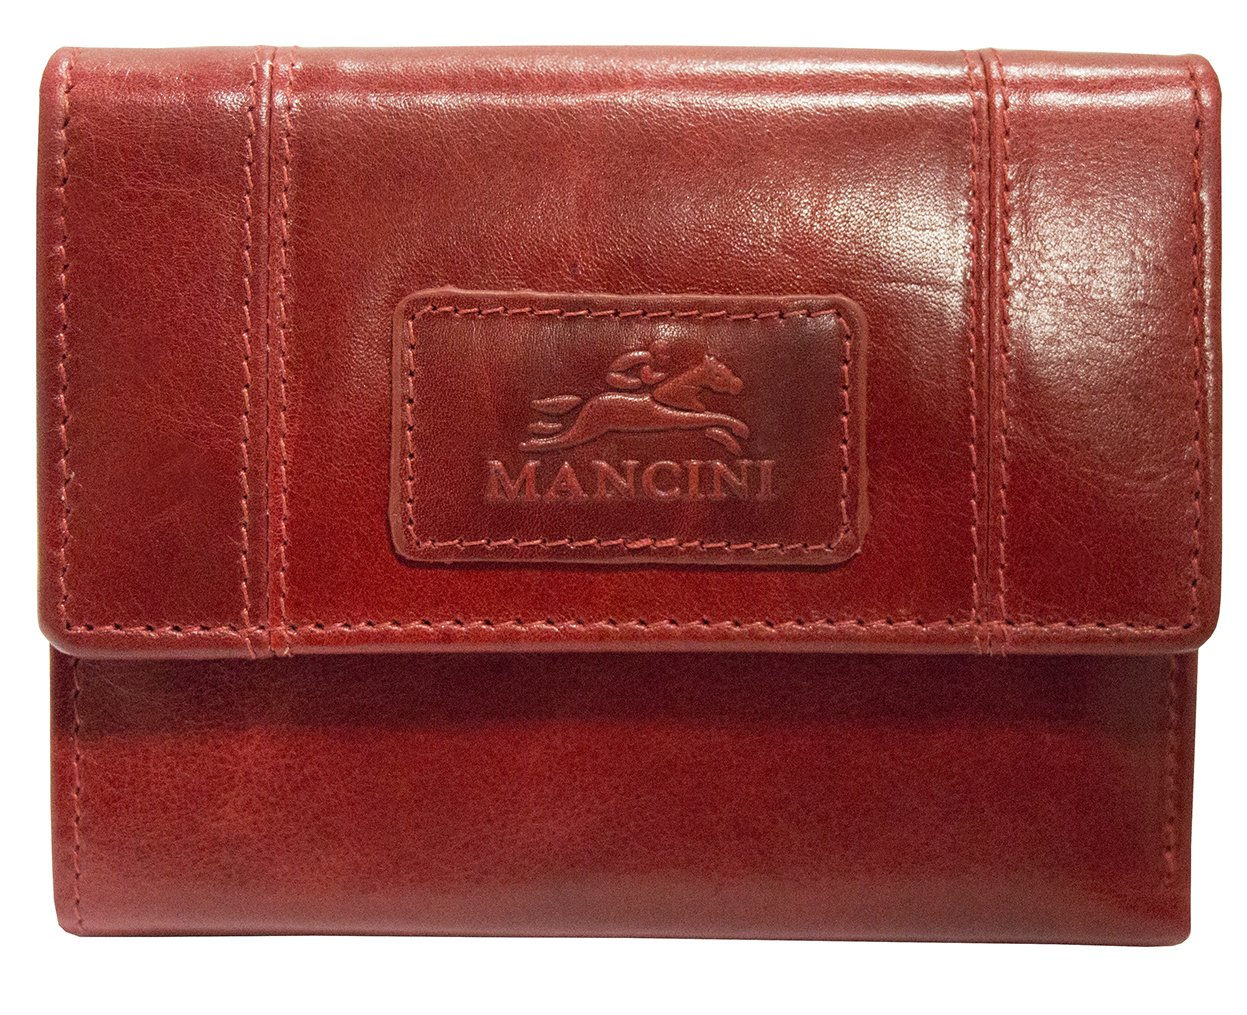 Mancini CASABLANCA Ladies' RFID Secure Small Clutch Wallet - Red